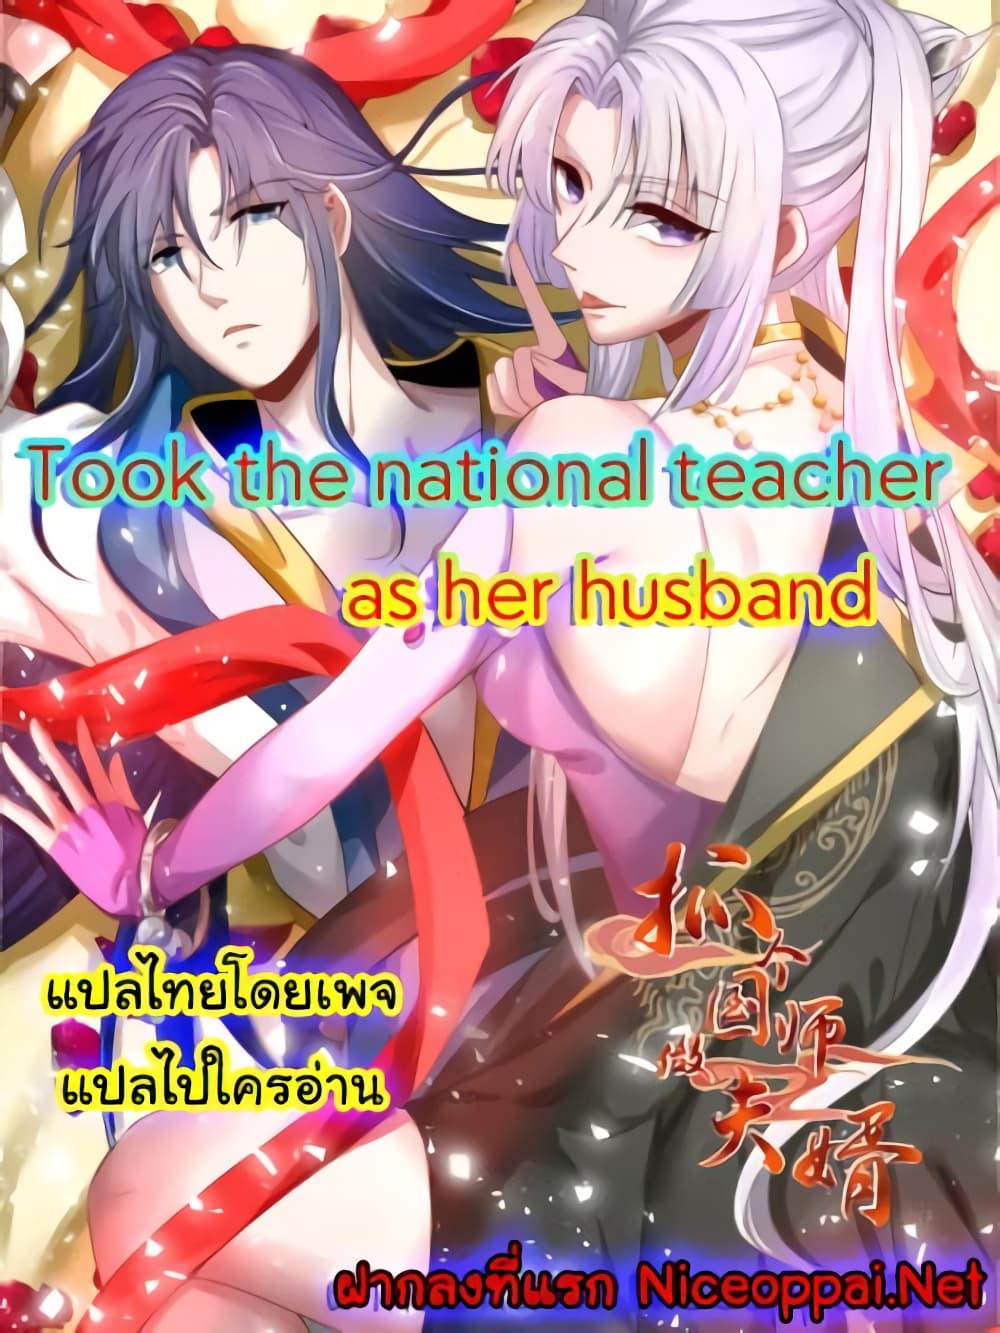 Took the National Teacher as Her Husband4 (1)